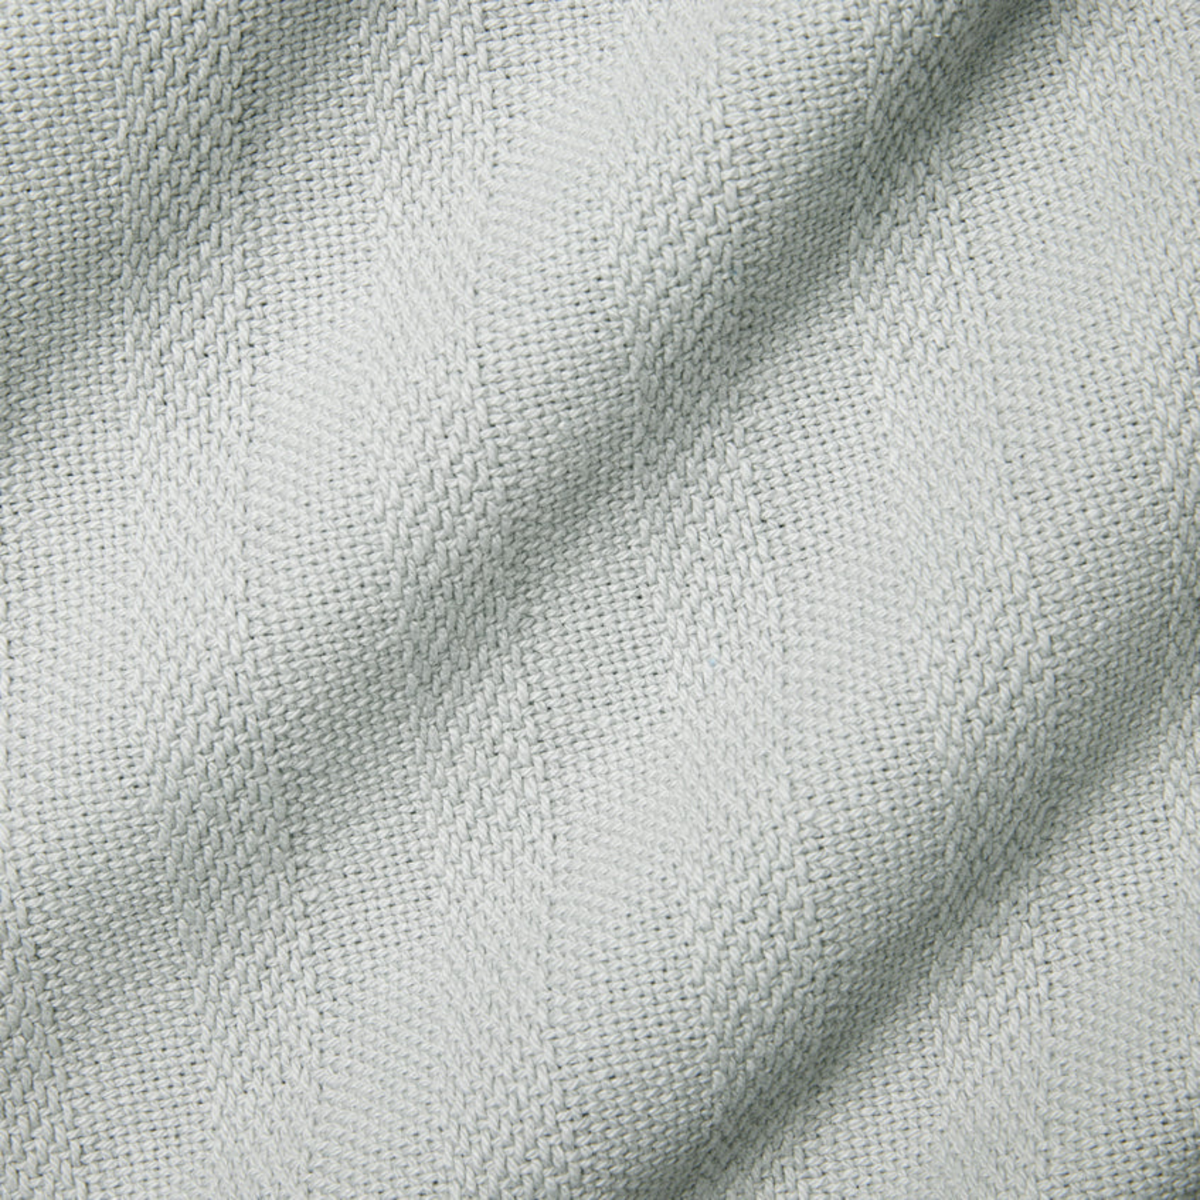 Swatch Sample of Sferra Tavira Blanket in Flint Color